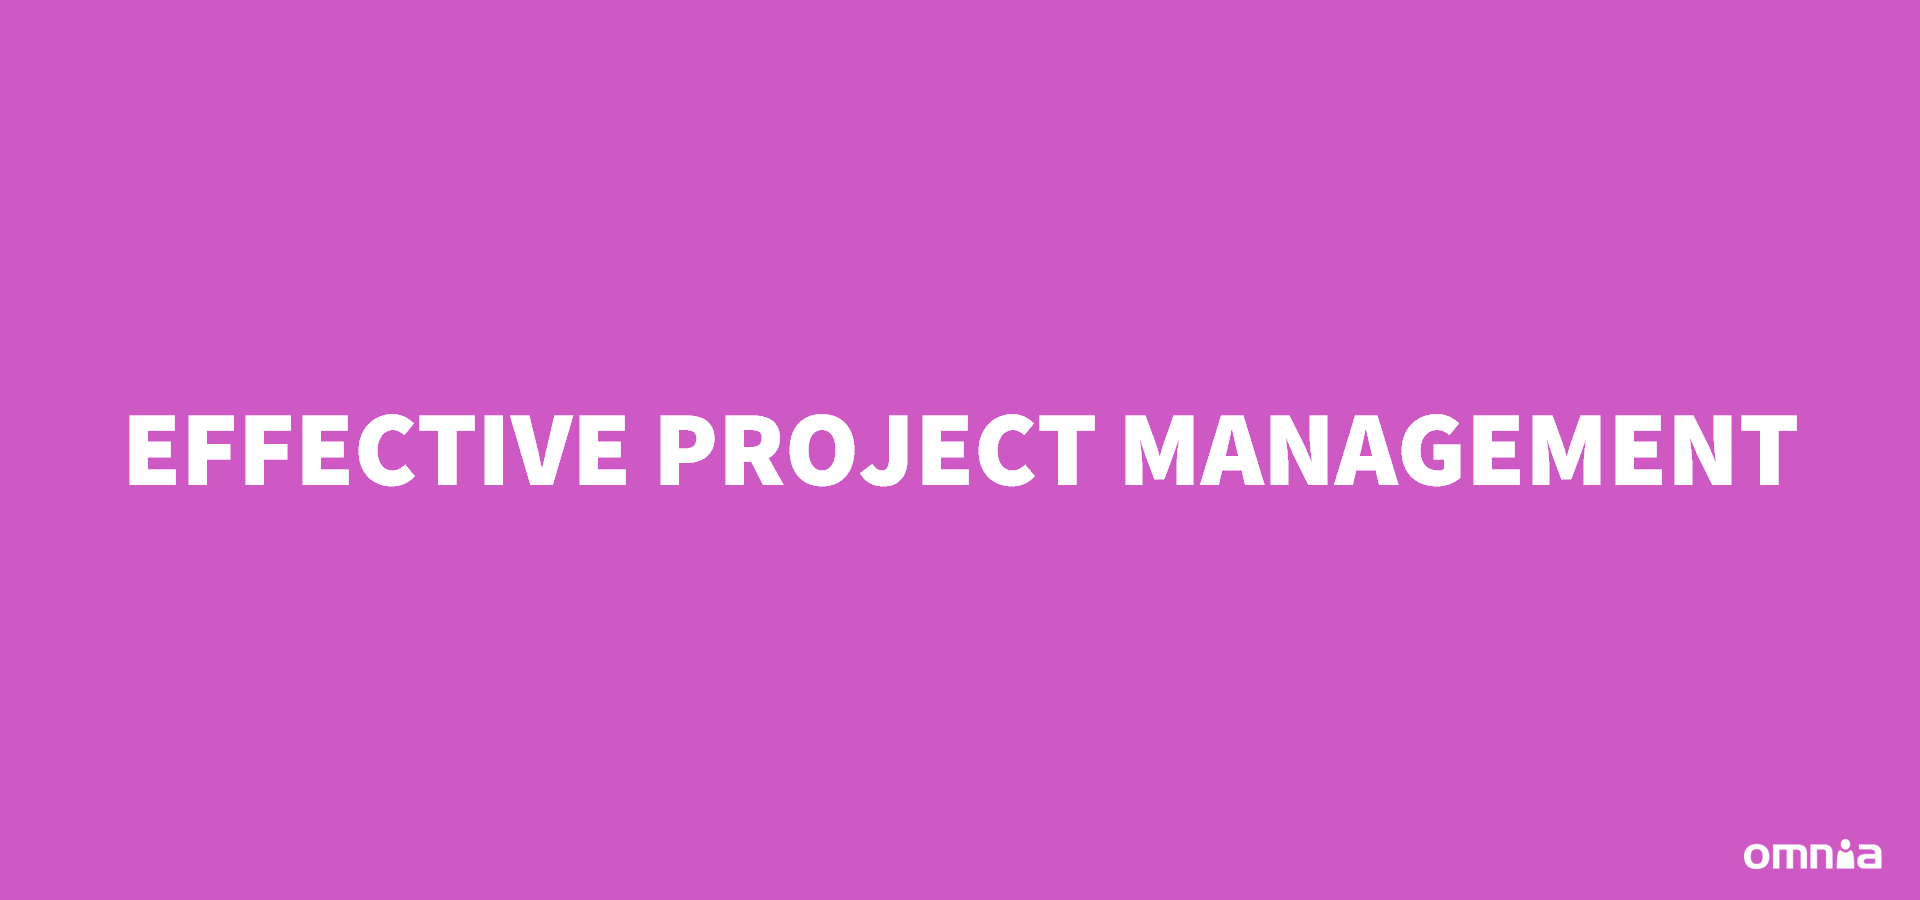 Effective-Project-Management-1920x900.png